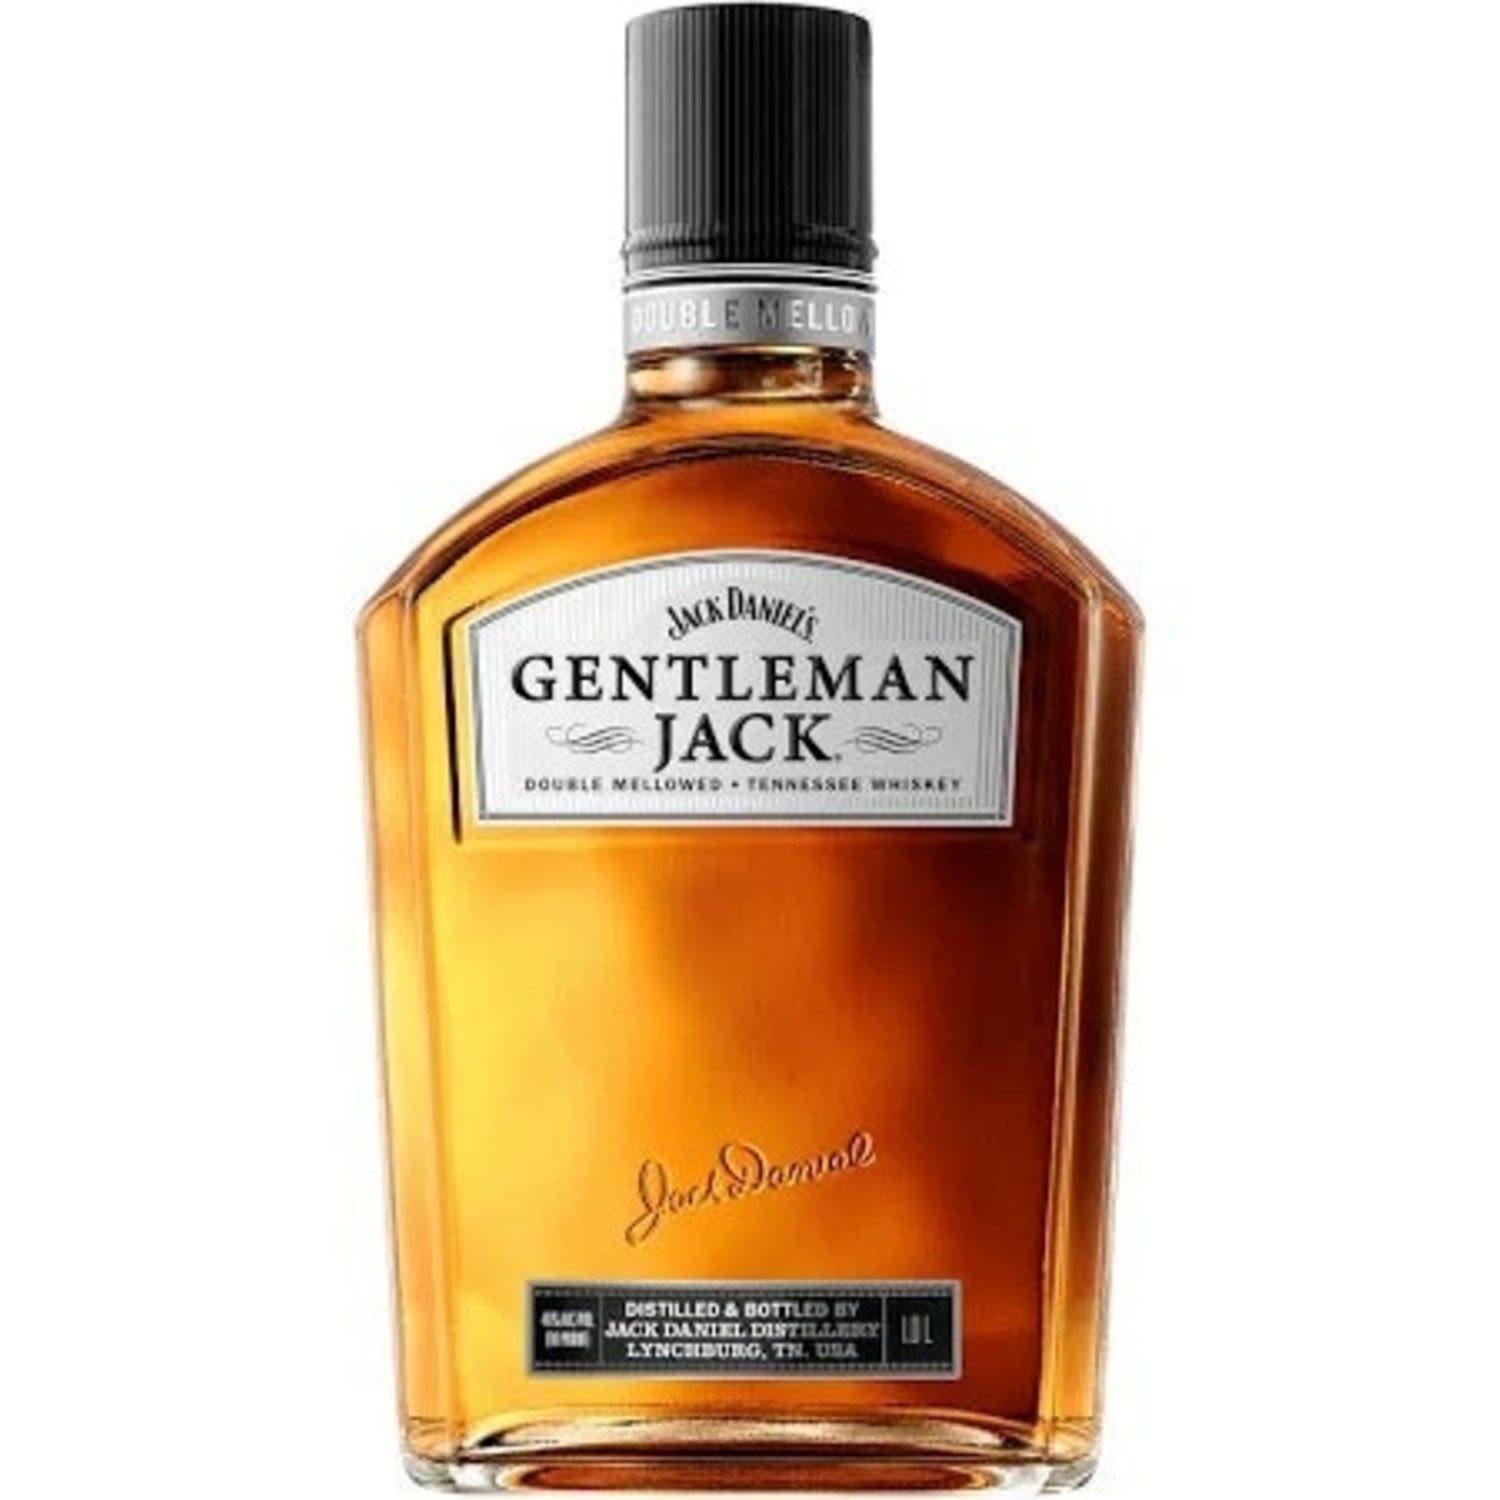 Jack Daniel's Gentleman Jack 1L Bottle